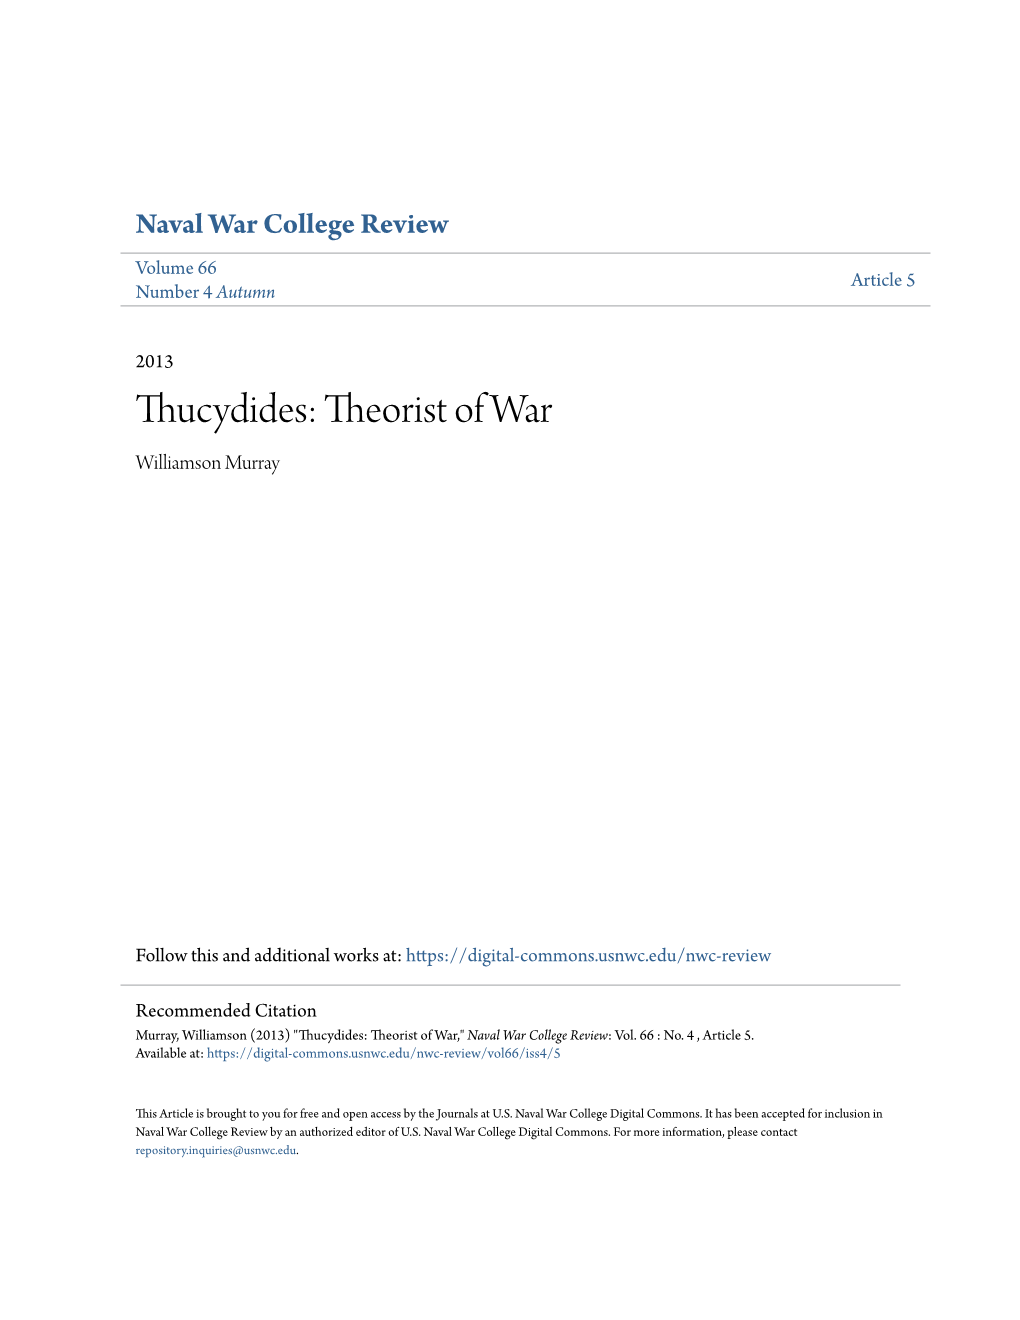 Thucydides: Theorist of War Williamson Murray